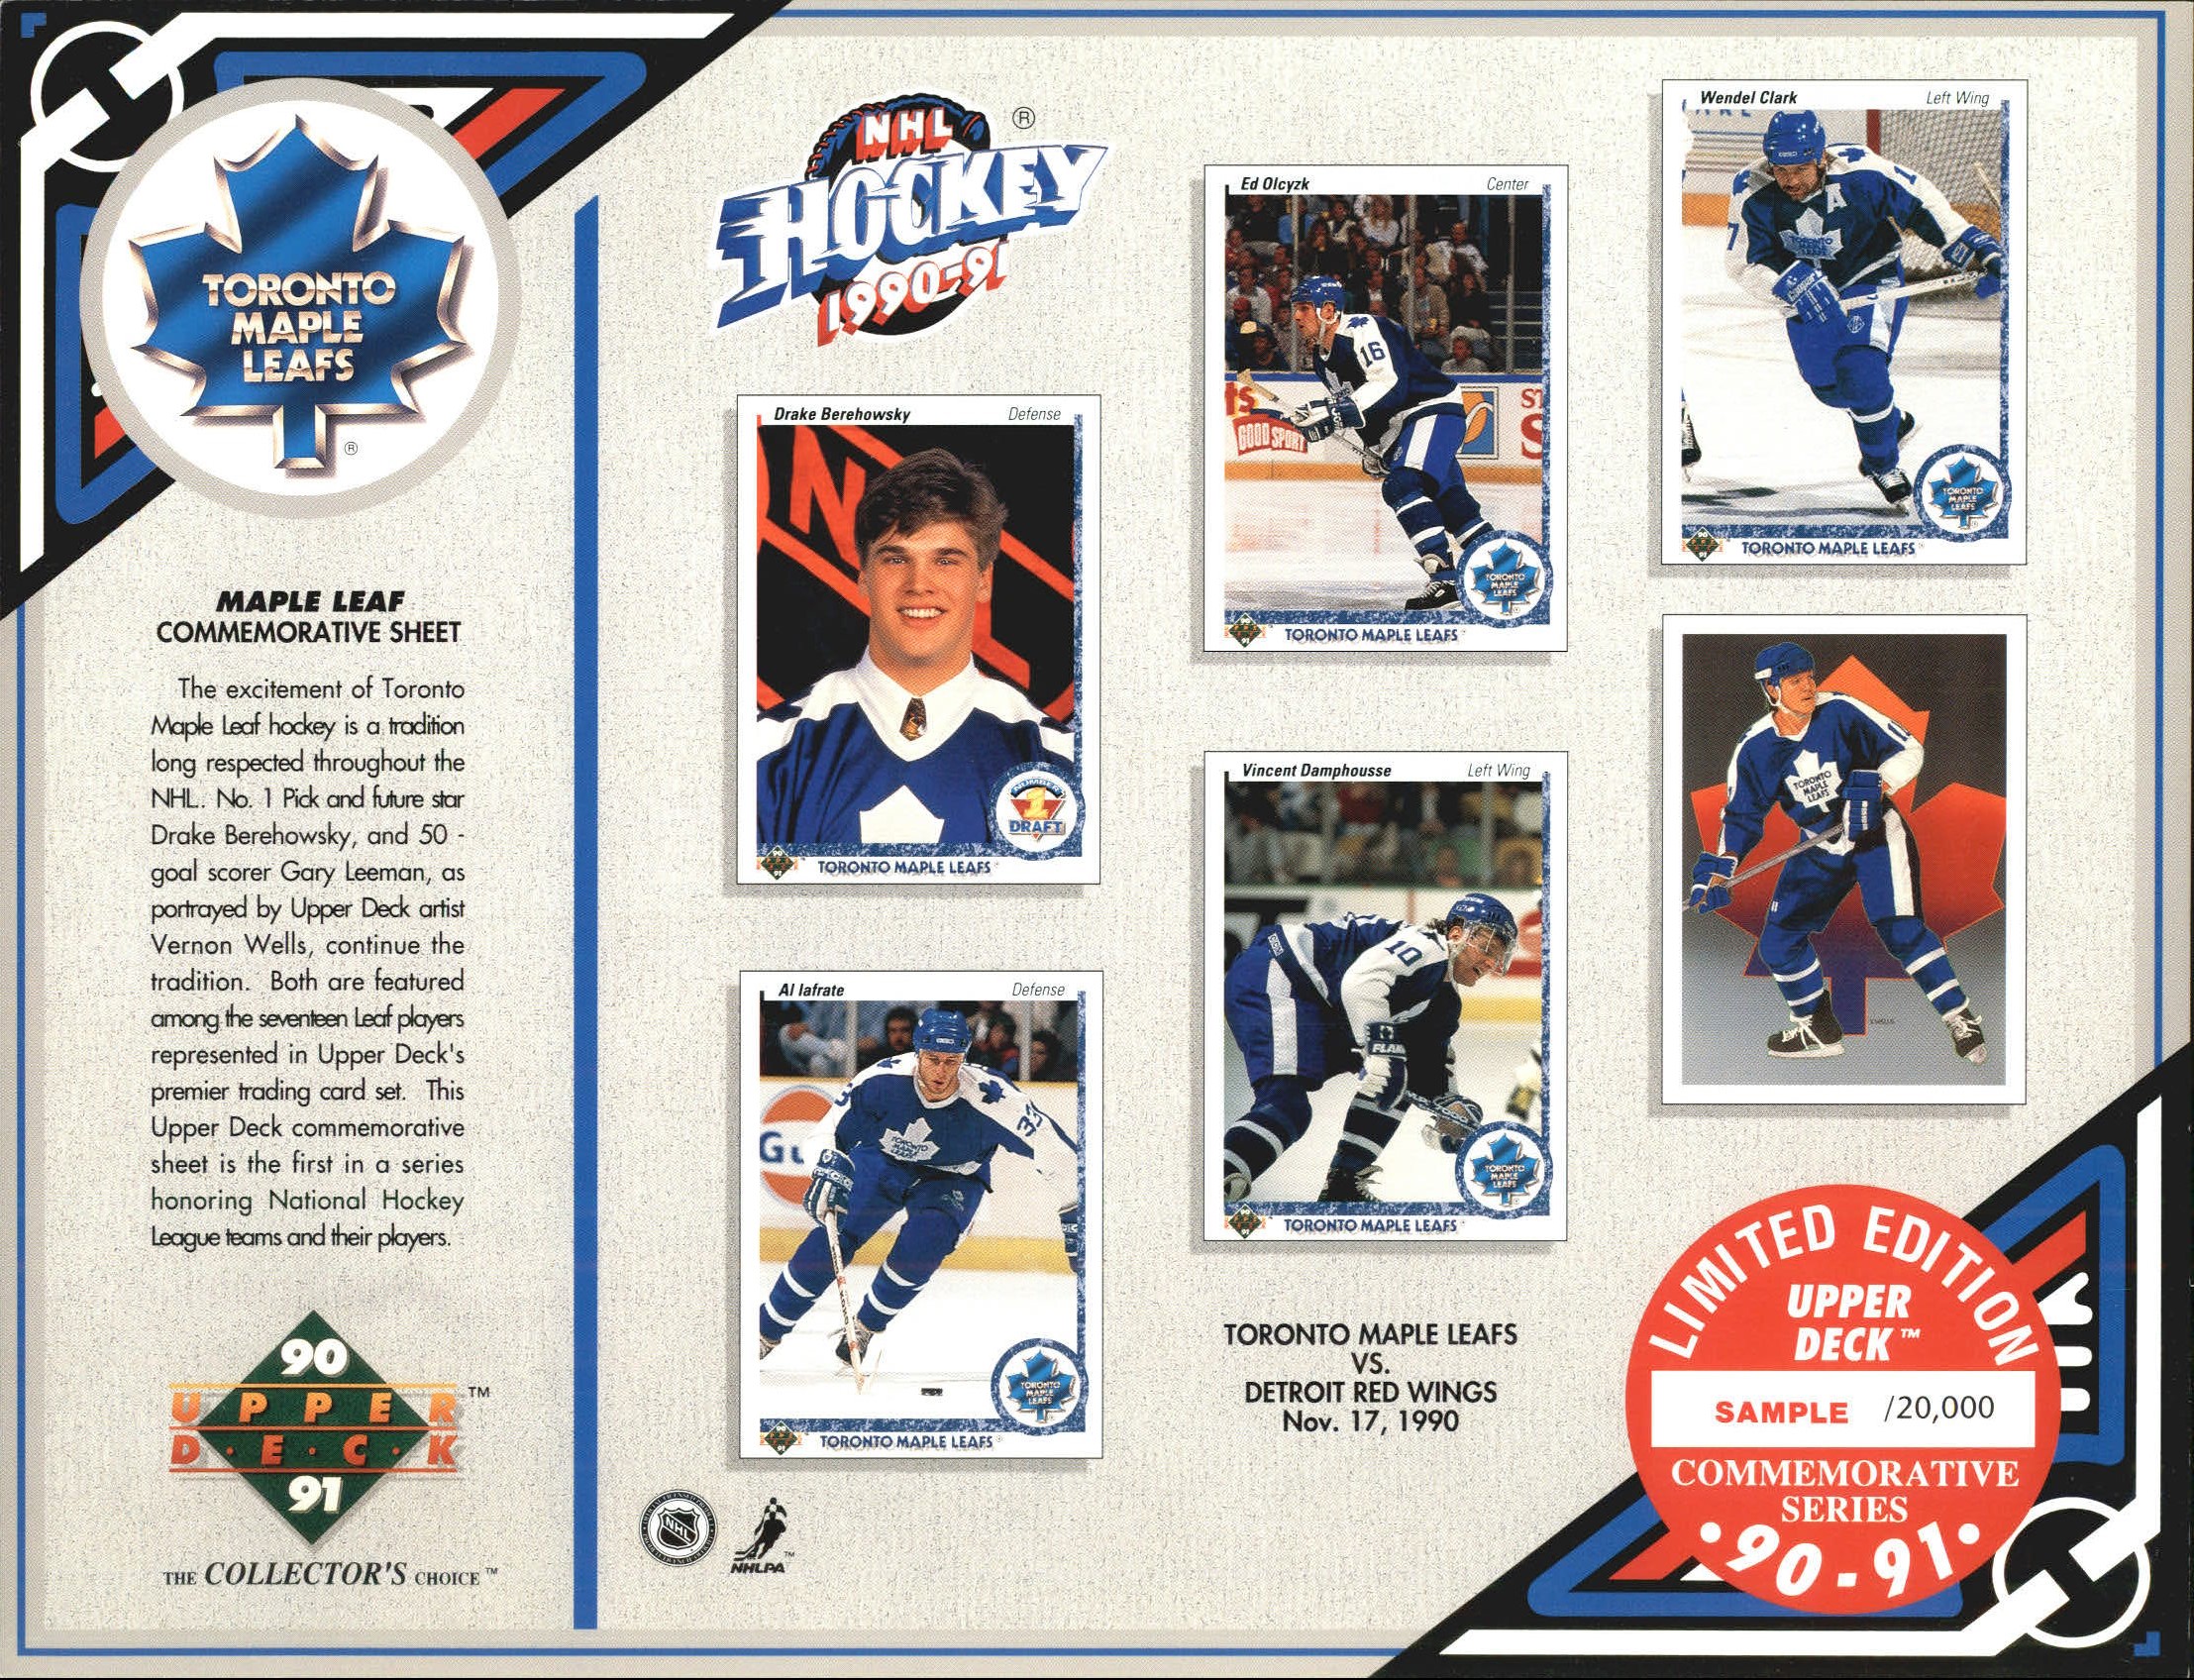 1990-91 Upper Deck Sheets #1 Toronto Maple Leafs/vs. Detroit Red Wings/Nov. 17, 1990 (20,000)/Al Iafrate/Ed Olcyzk/Vincent Damphousse/Wendel Clark/Gary Leeman/Drake Berehowsky